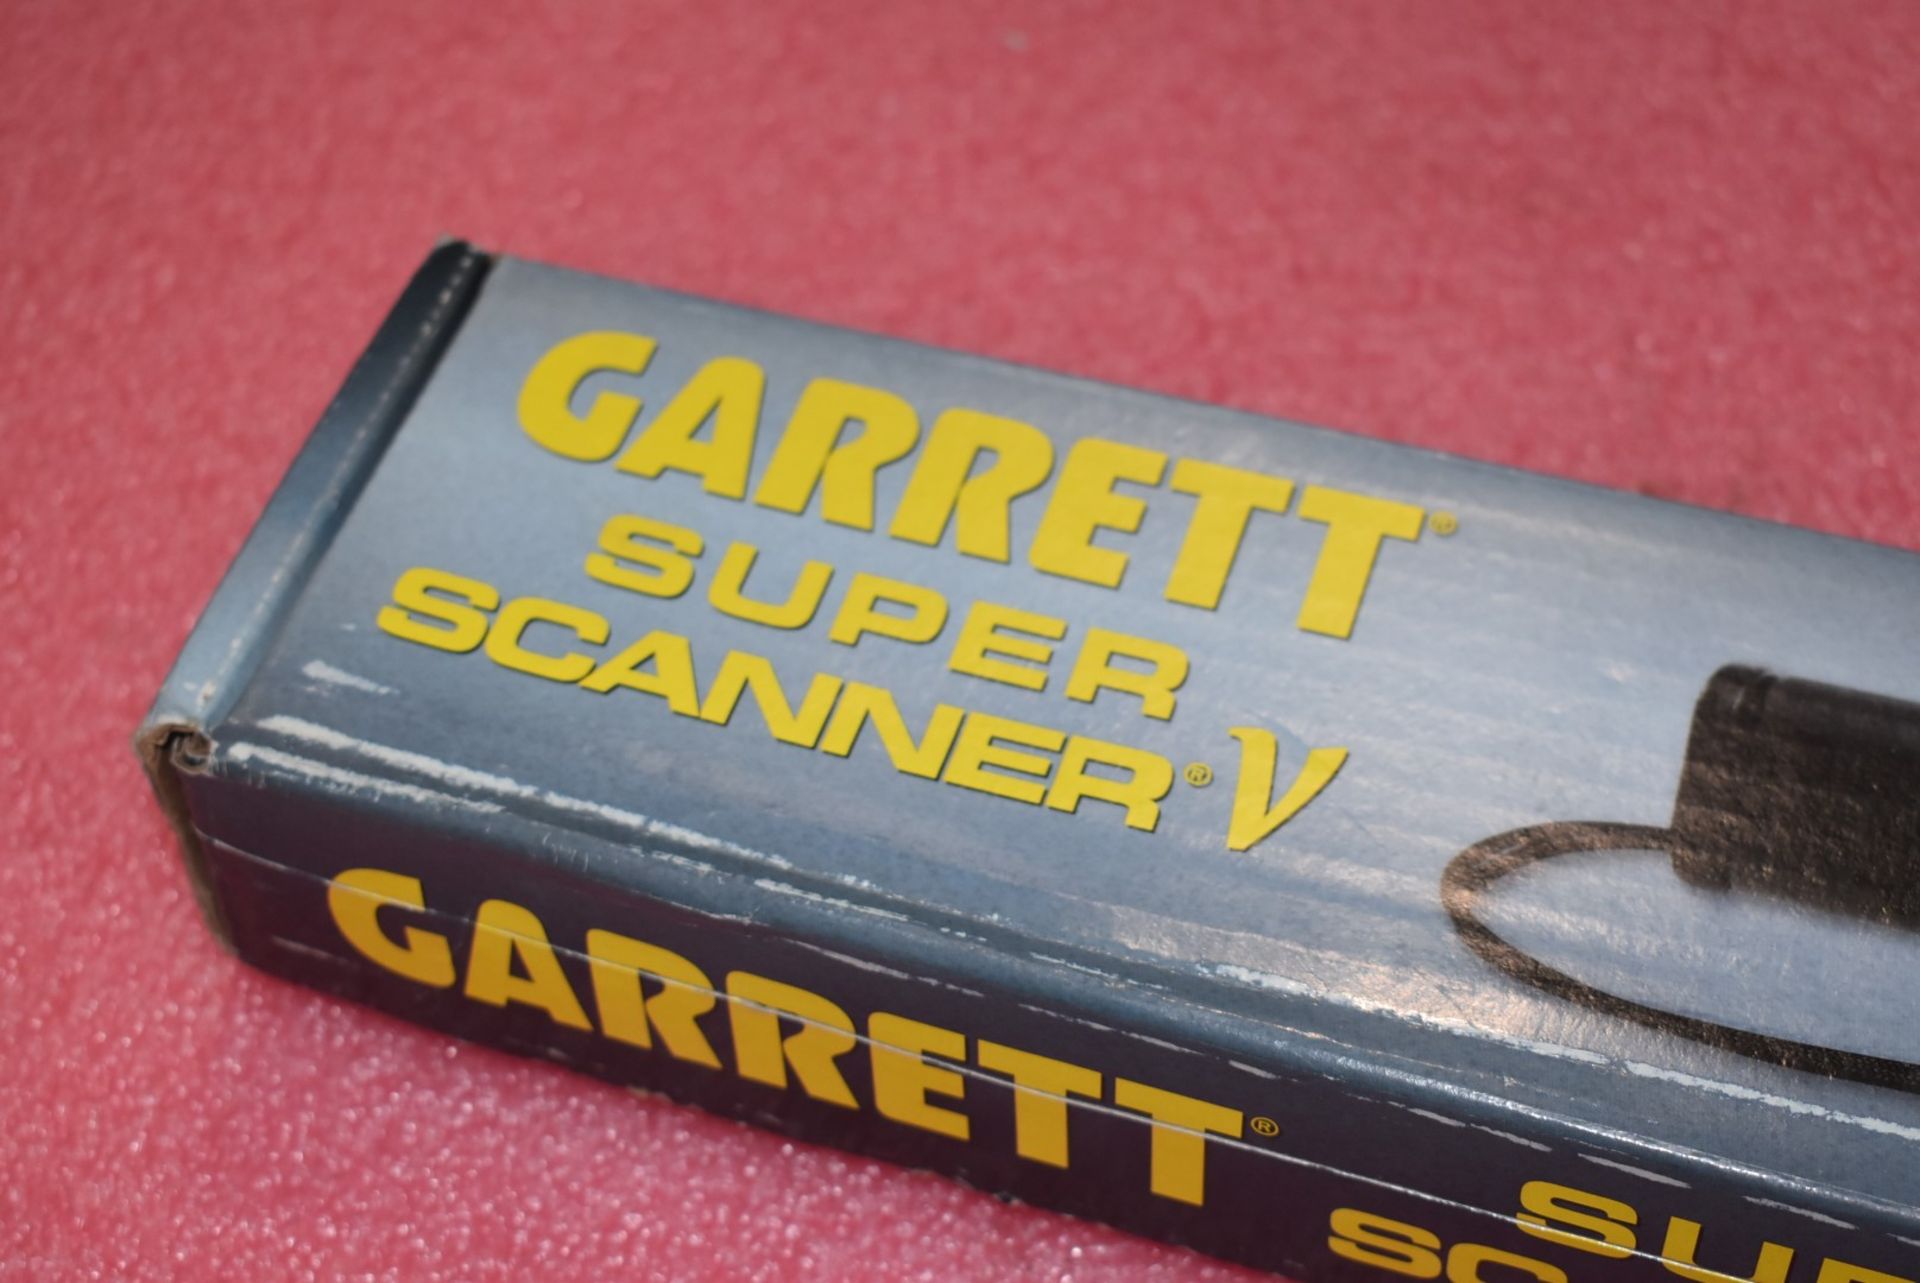 1 x Garrett Super Scanner V Vibrating Audible Hand Held Metal Detector - Unused With Original - Image 4 of 9